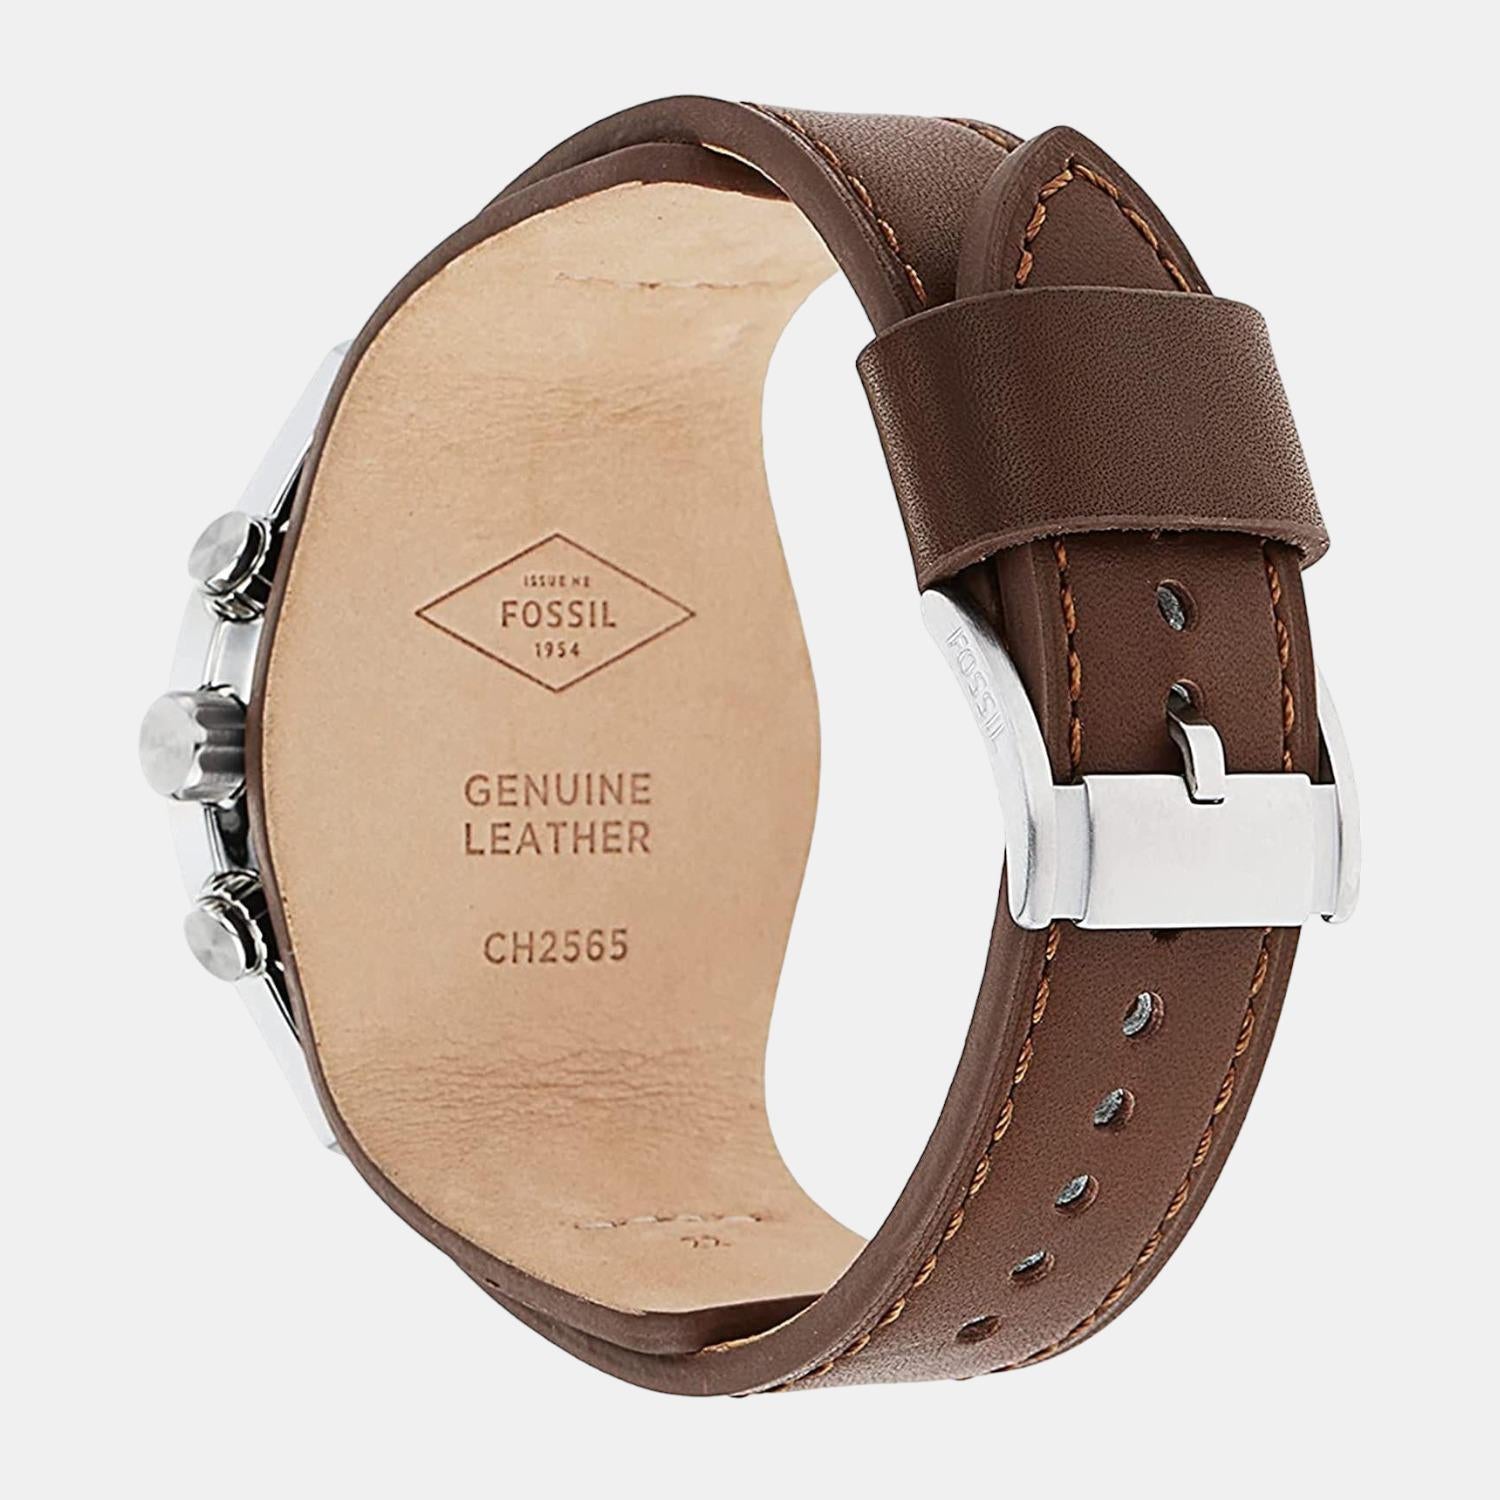 Fossil - CH2565 Cuff Chronograph Leather Watch SKU:7569475 - YouTube